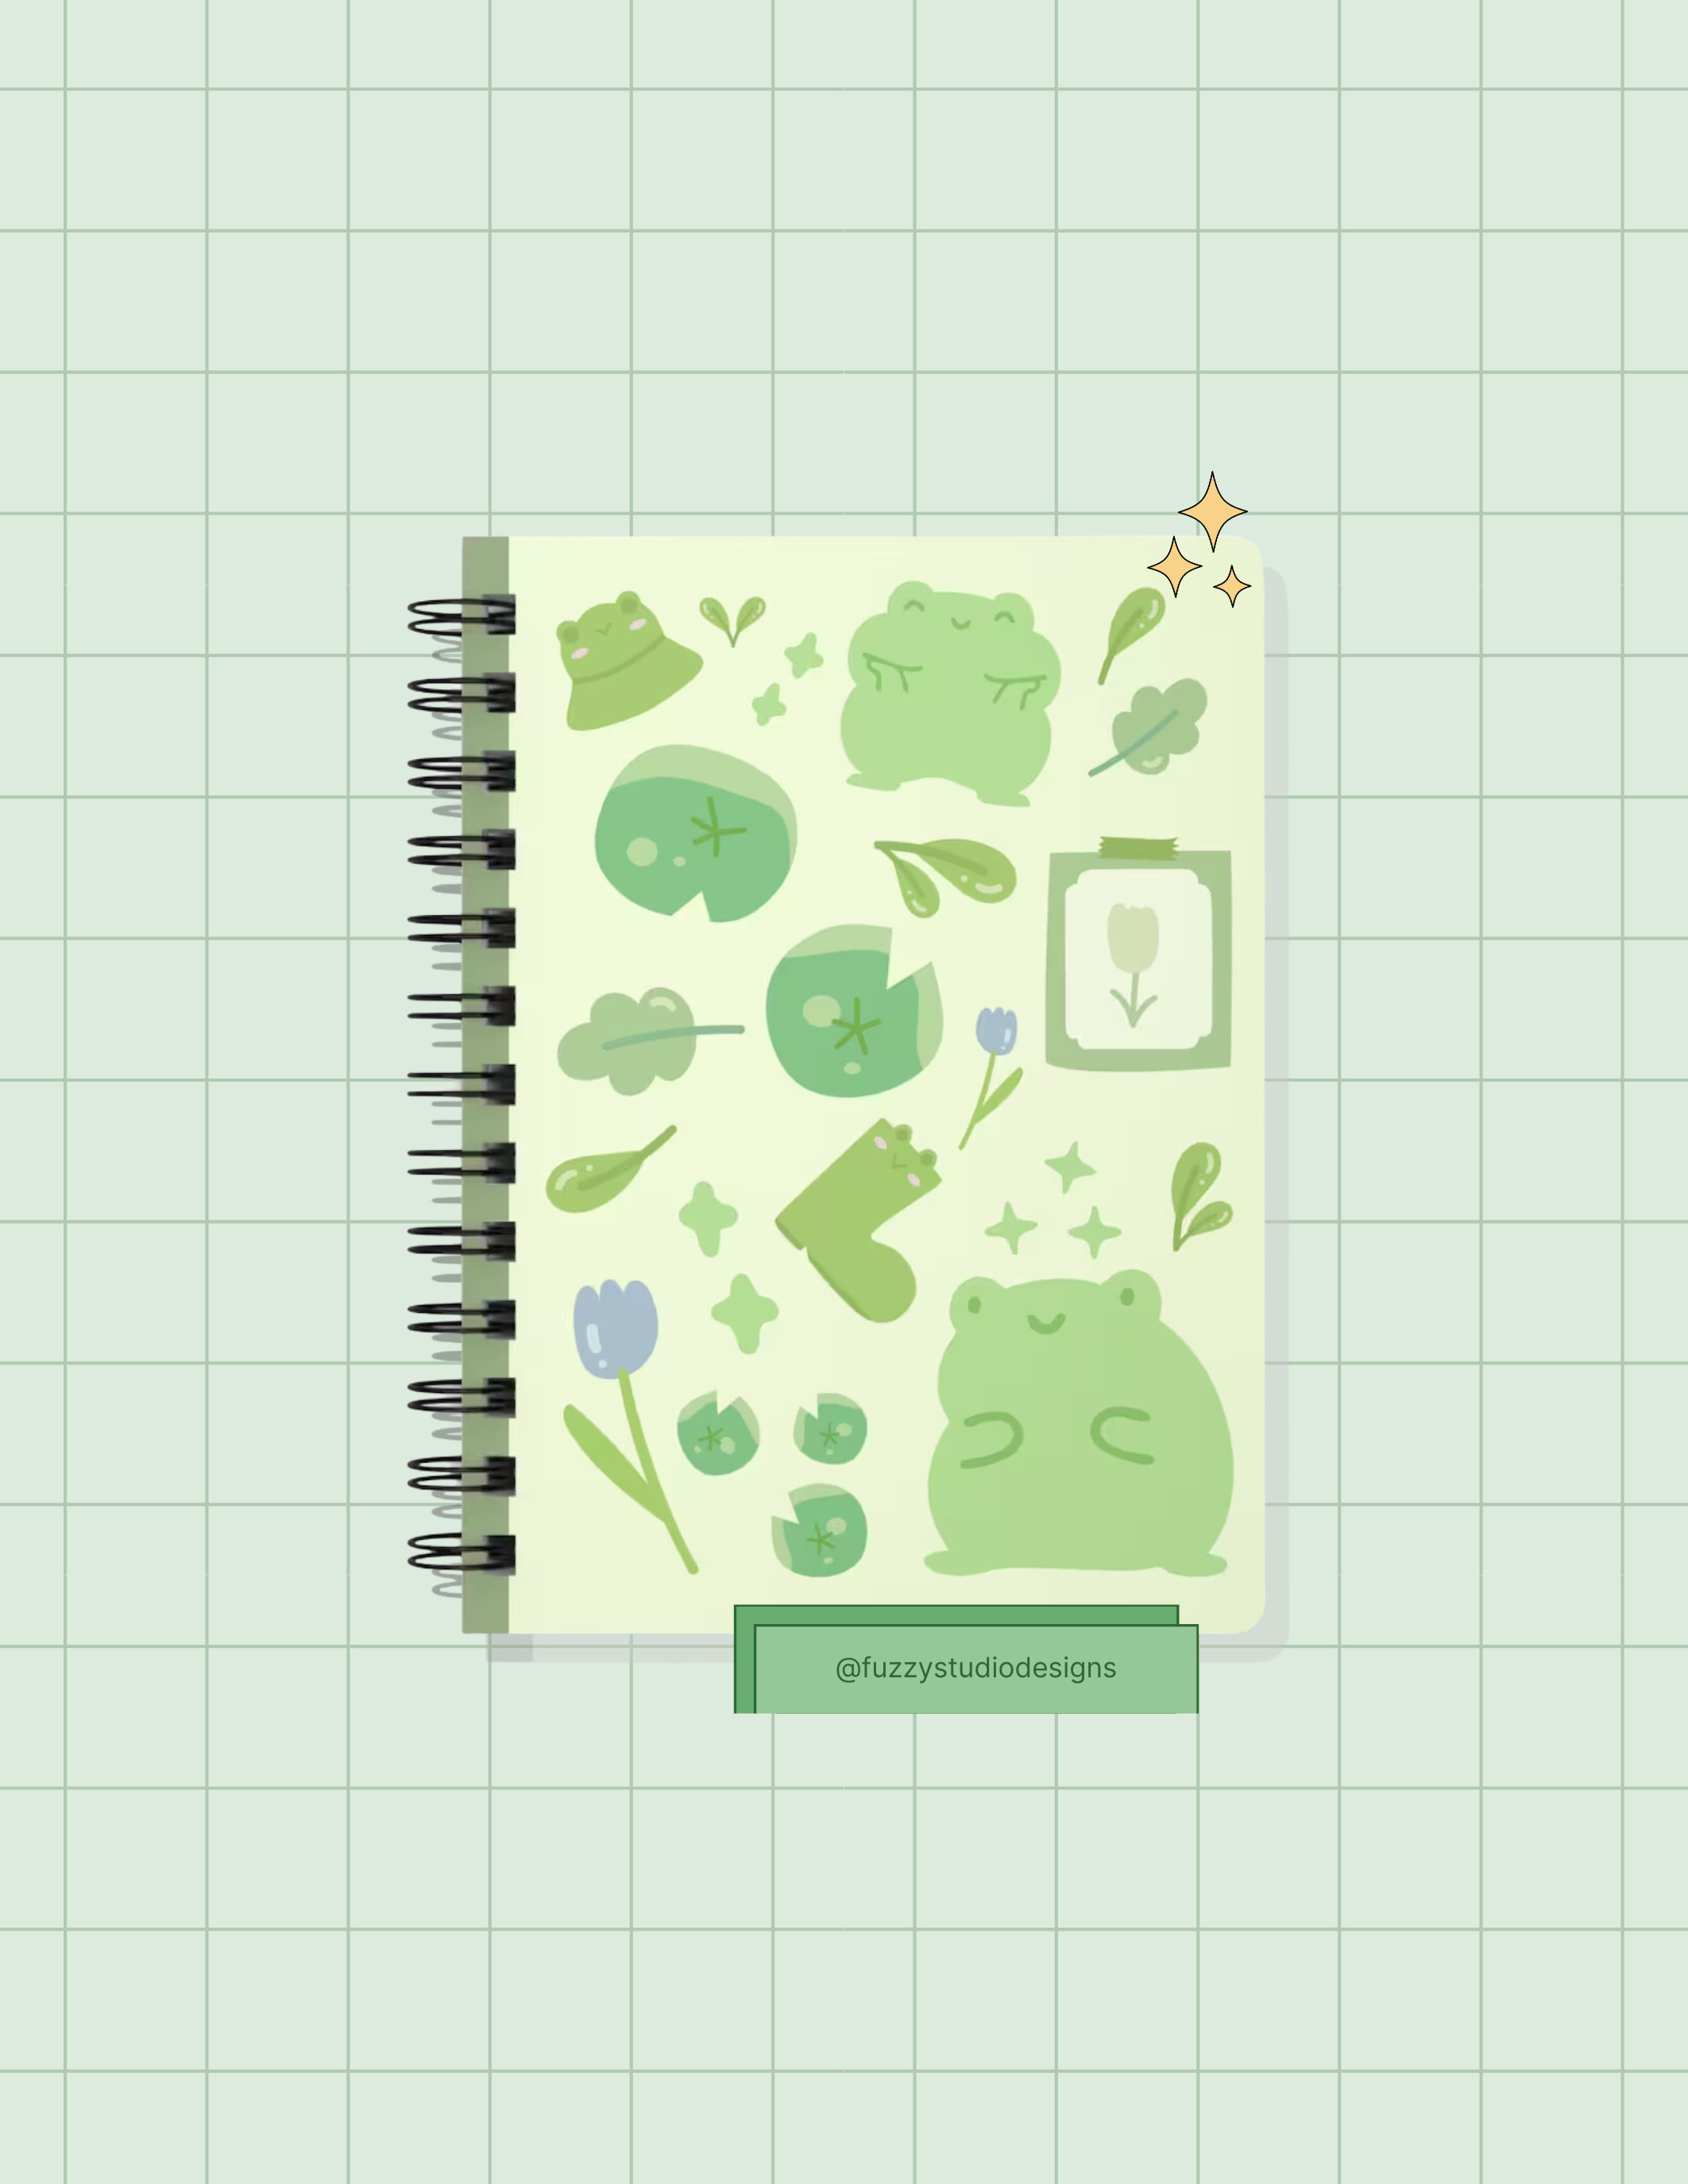 Cute A7 Spiral Notebook,kawaii Notebook,ready to Ship,adorable